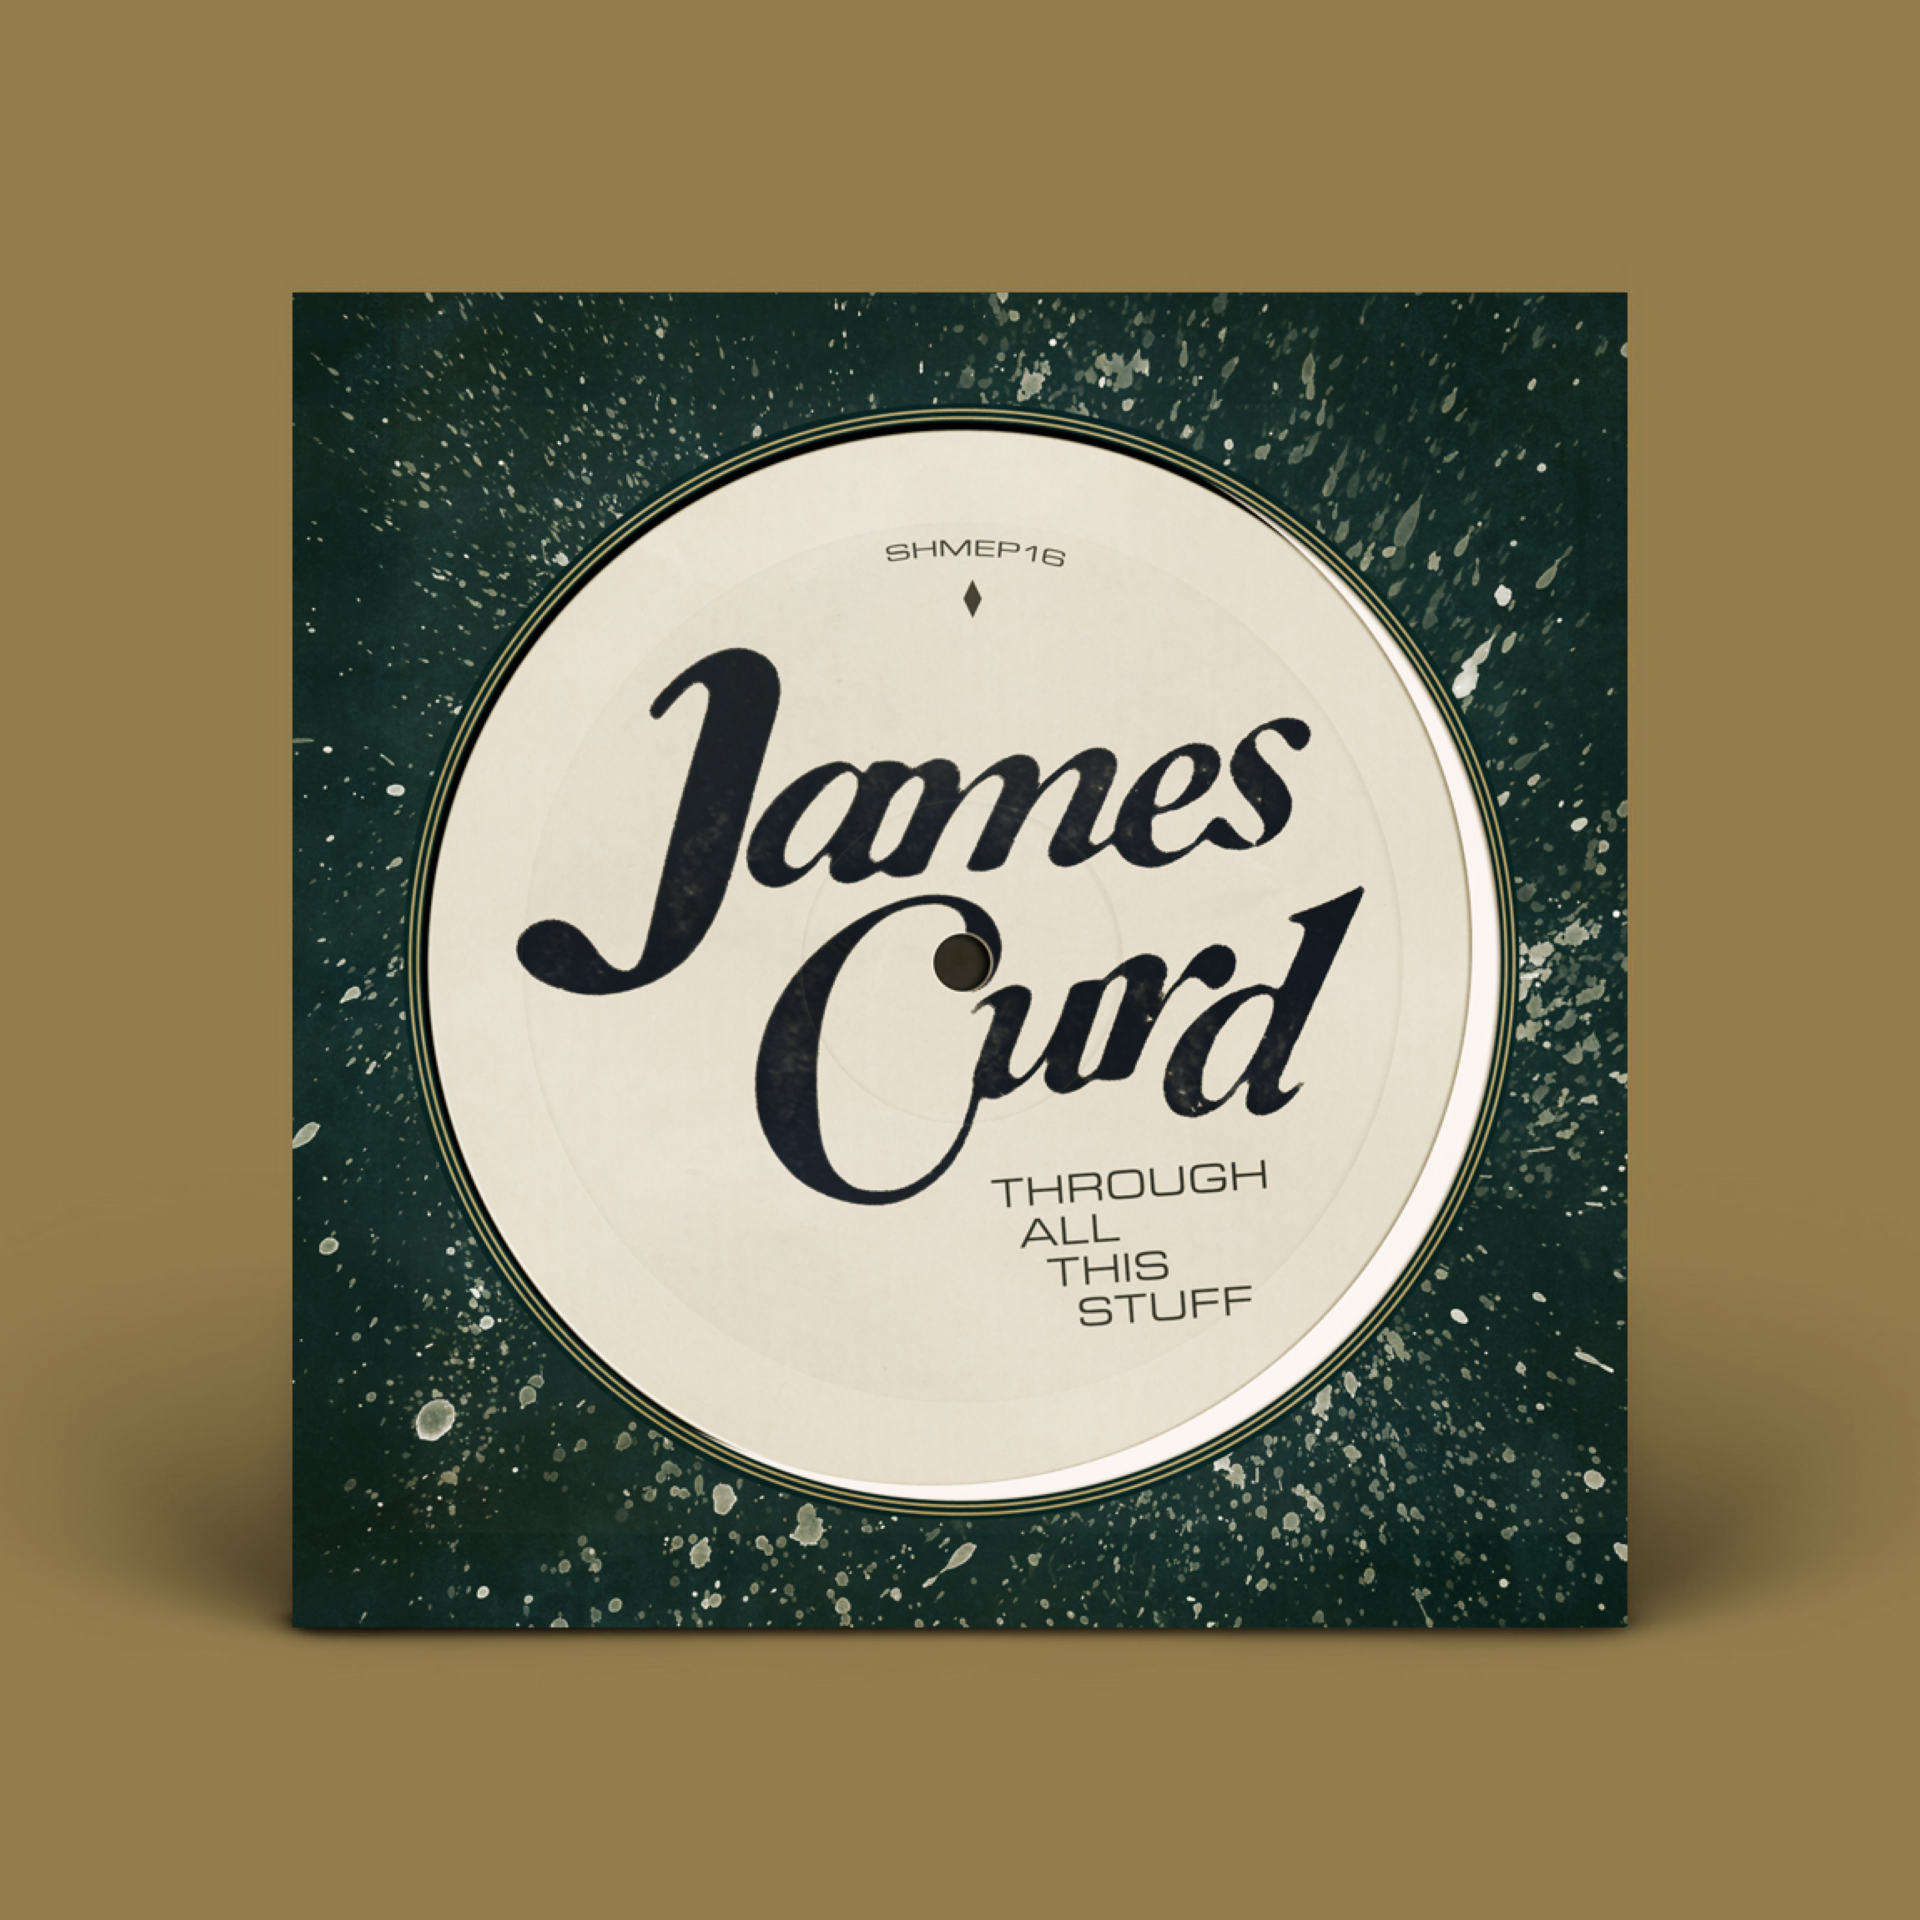 James Curd - Through All This Stuff